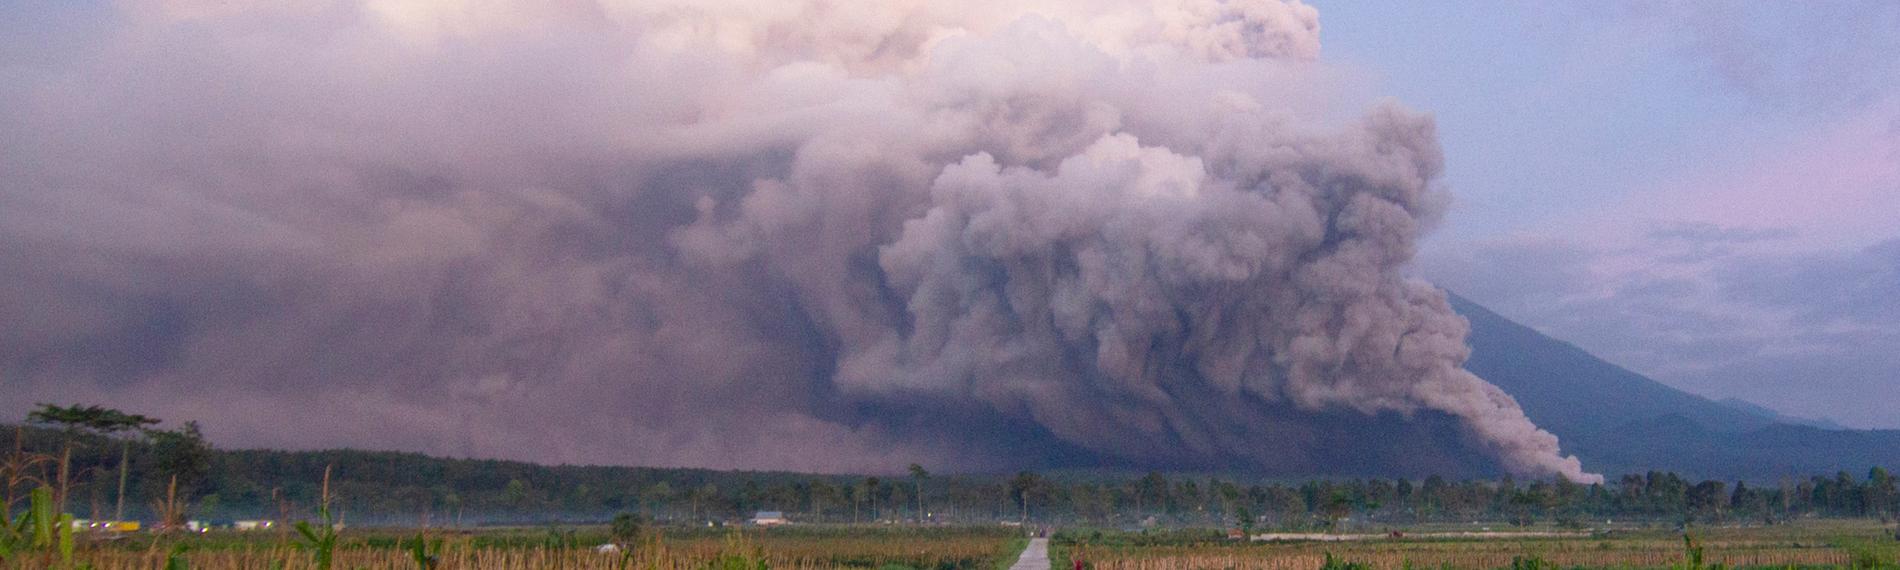 Indonesien, Lumajang: Rauch steigt nach dem Ausbruch des Vulkans Semeru auf.